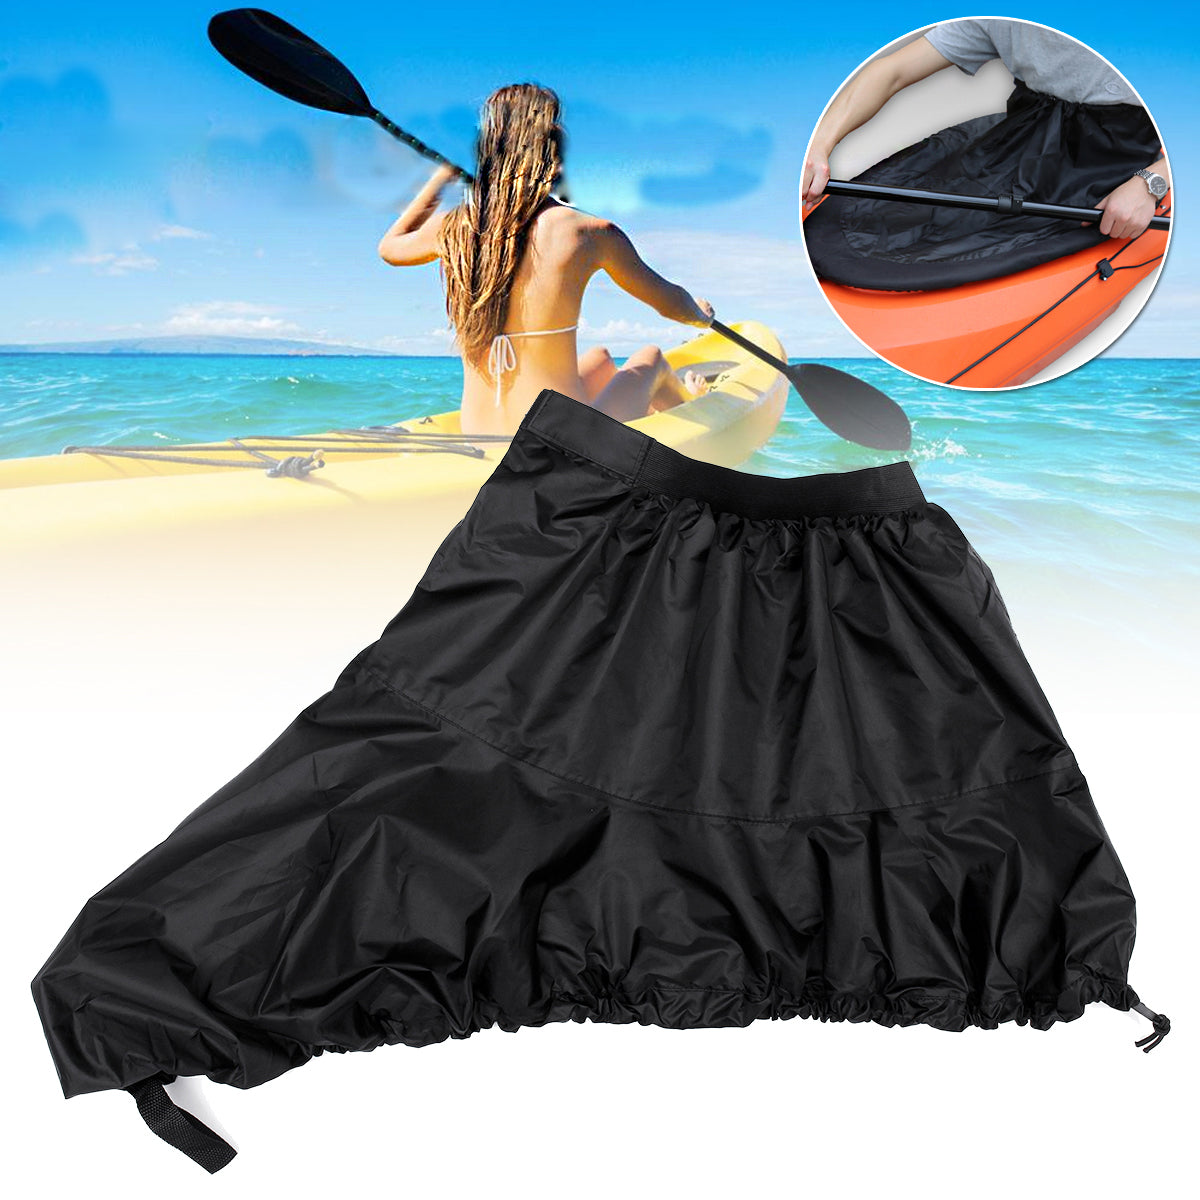 kayak spray skirt waterproof cover boat canoe cover oxford cloth uv werend sun portector